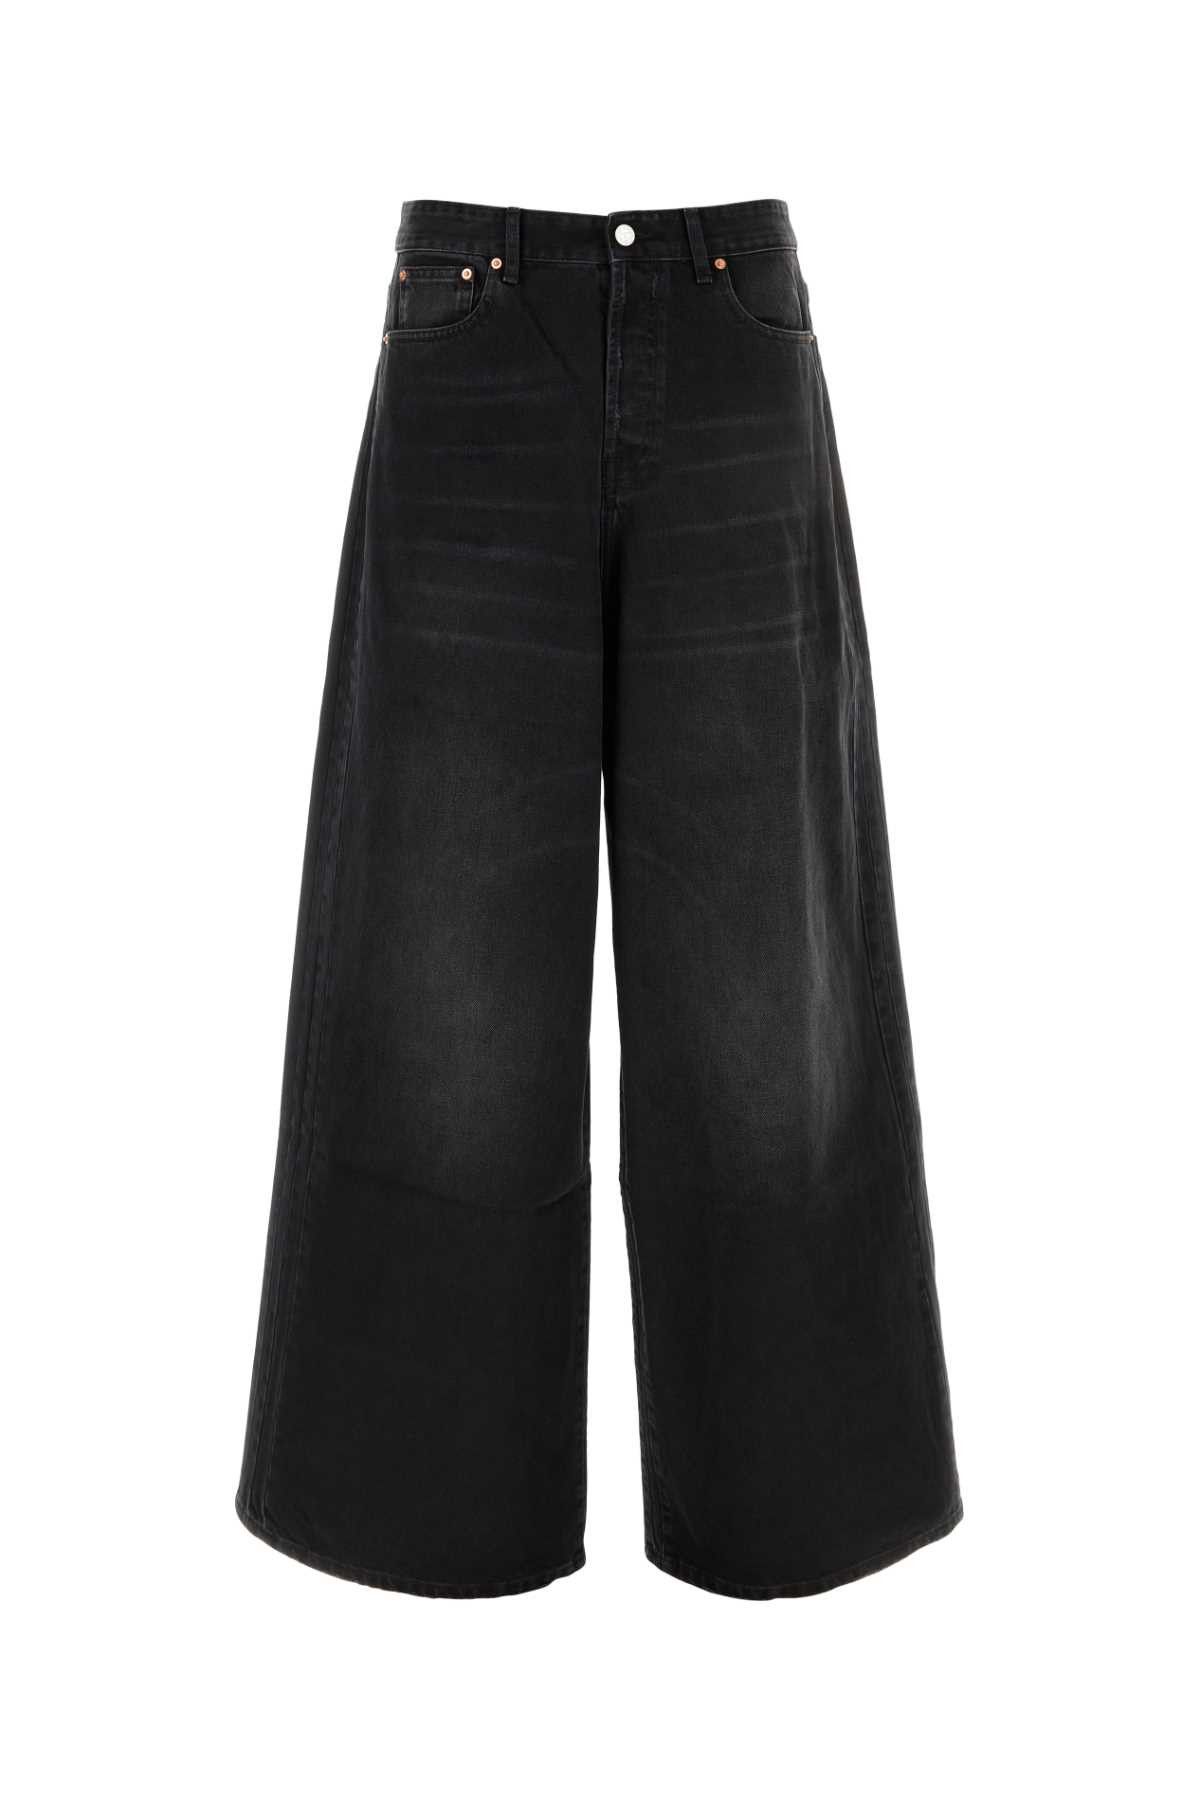 Pre-owned Vetements Black Denim Wide-leg Jeans